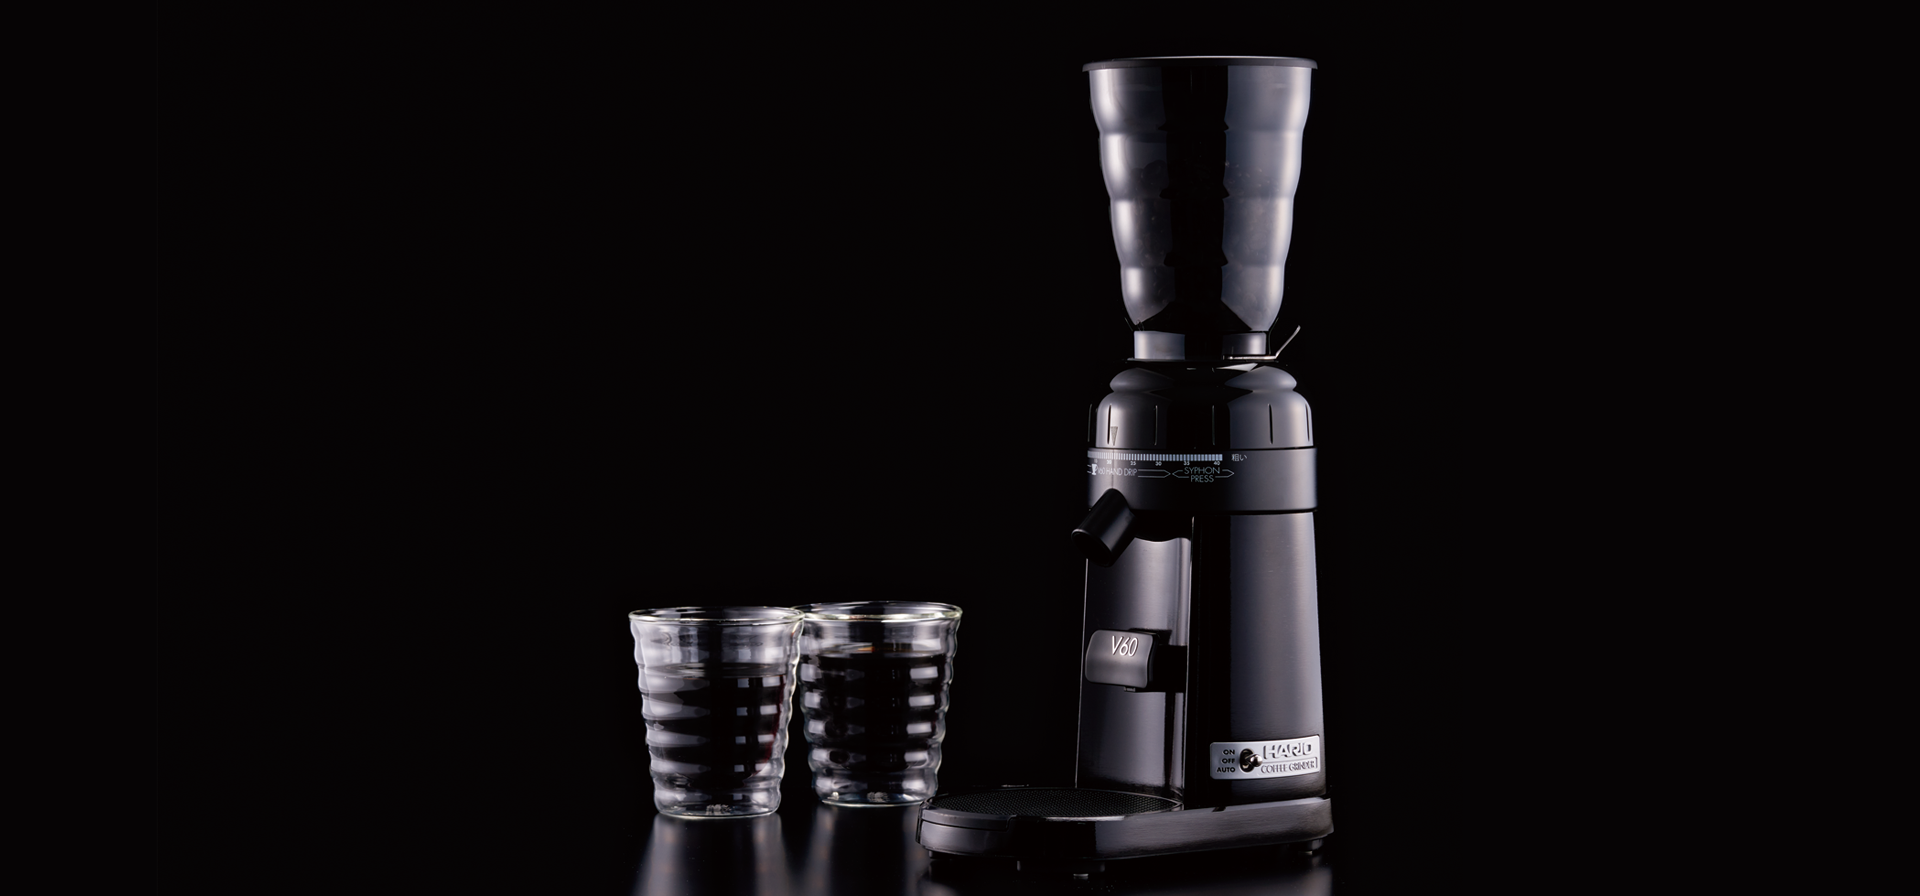 V60 Electric Coffee Grinder - HARIO CO., LTD.